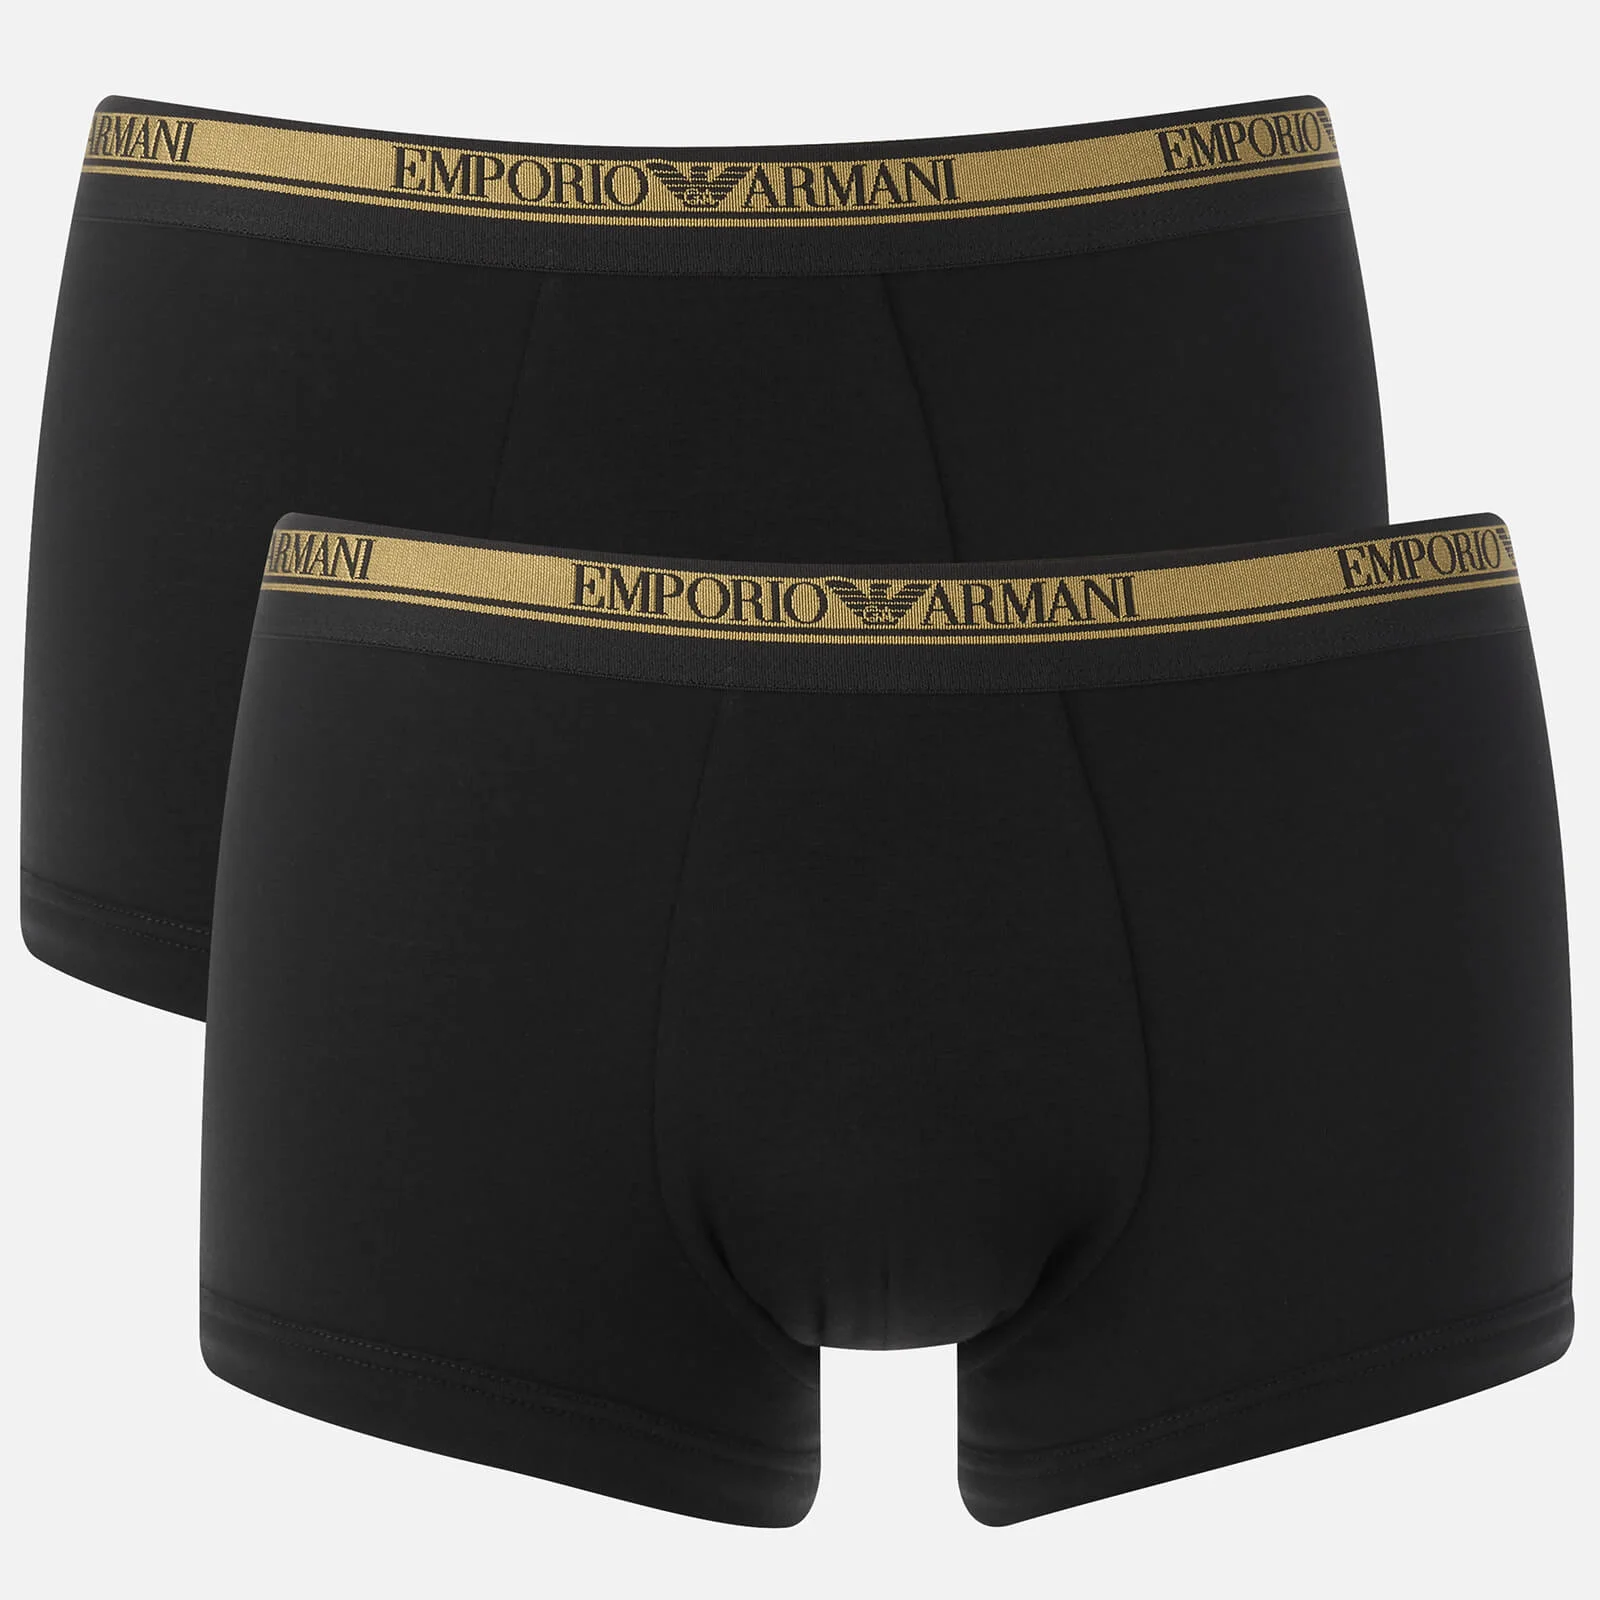 Emporio Armani Men's 2 Pack Trunk Boxer Shorts - Black/Black Image 1